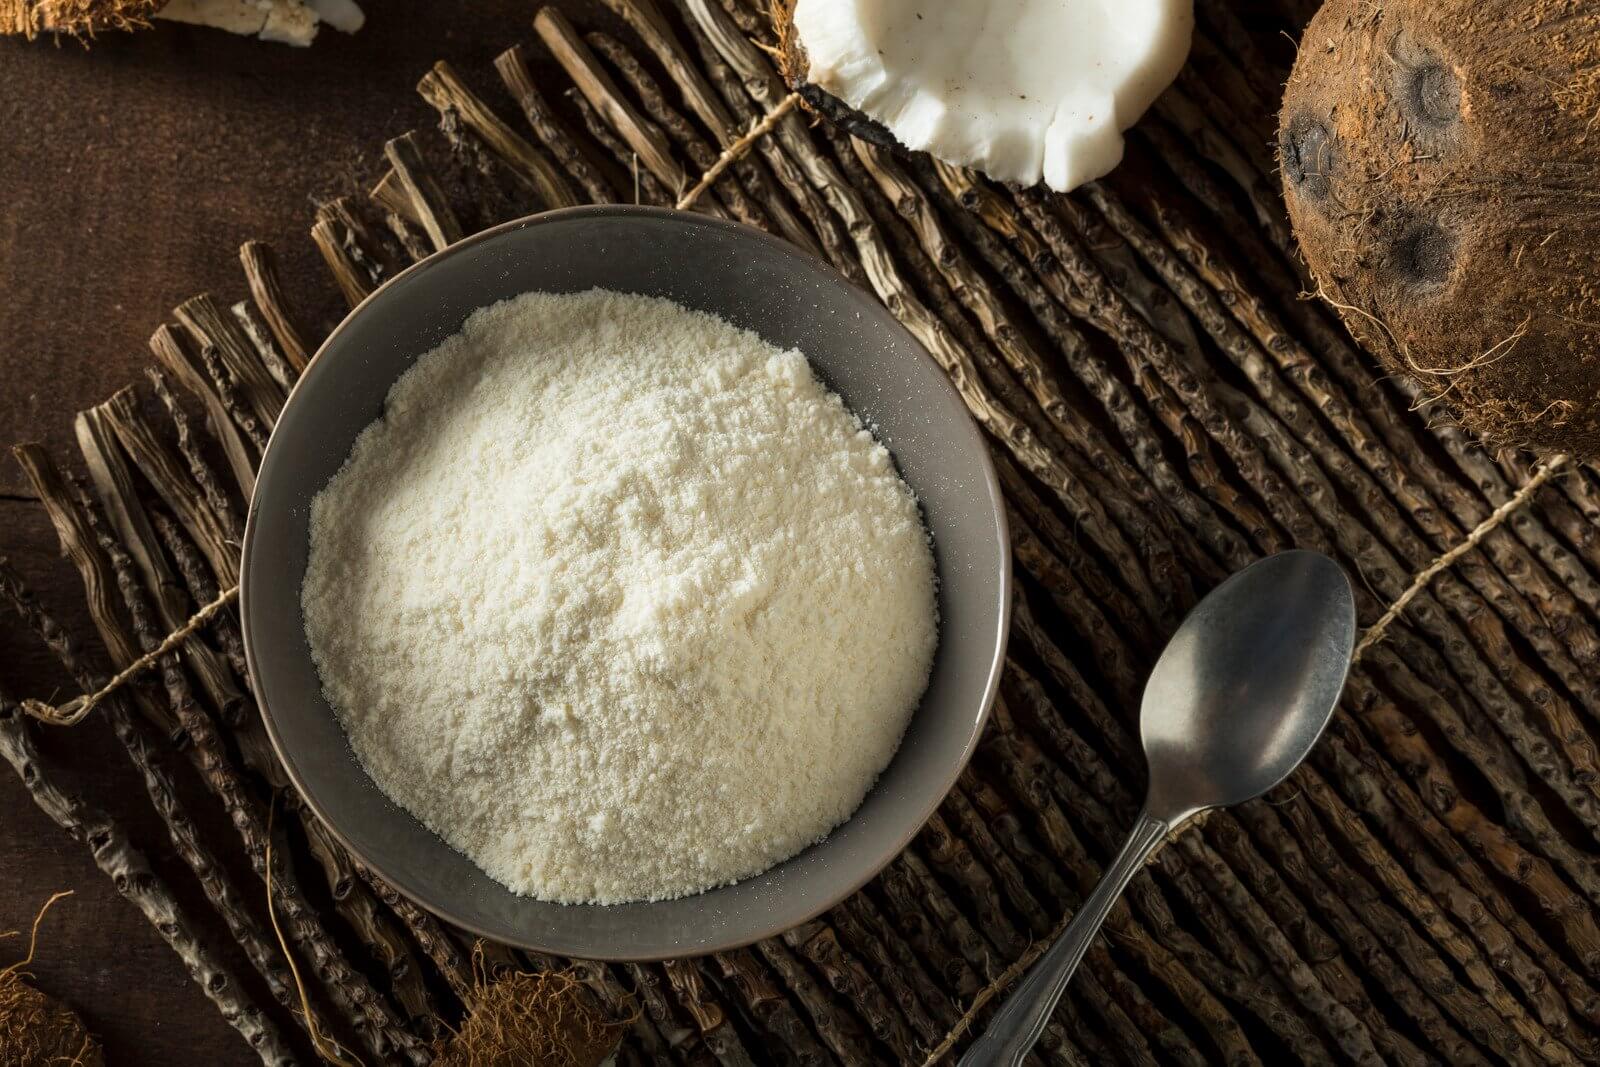 Why Coconut Flour? Part 1 - History